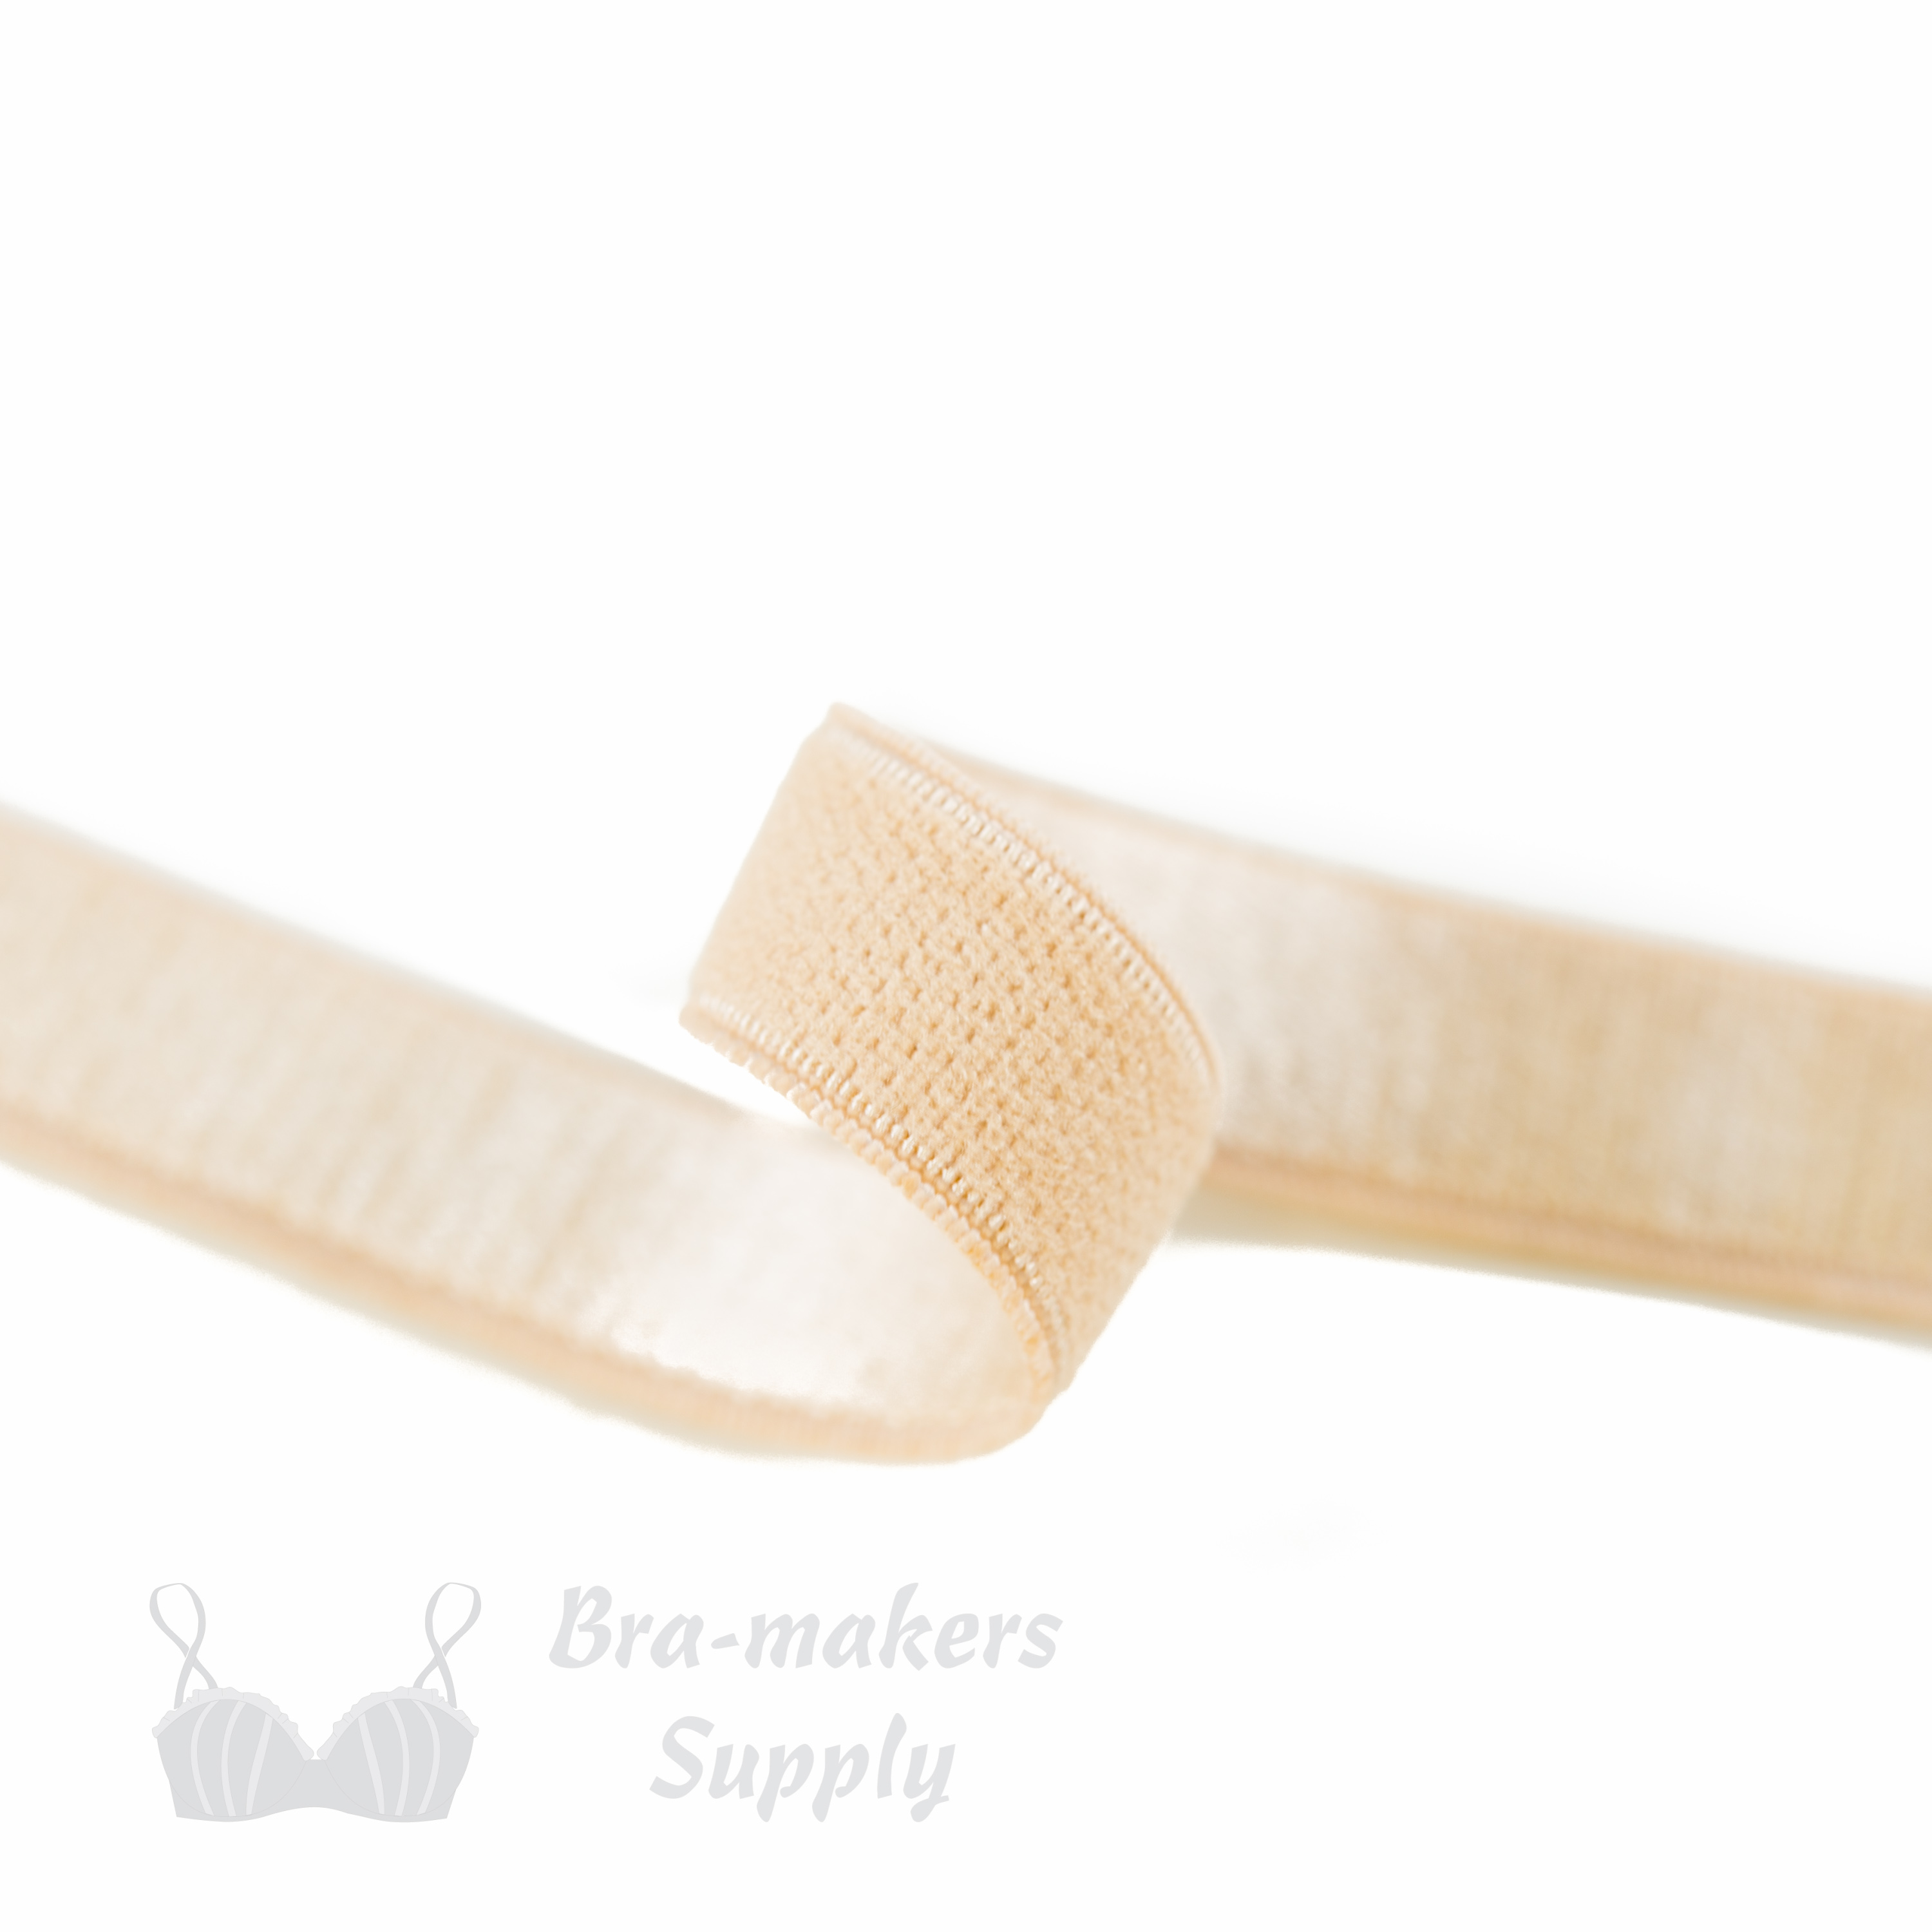 ESR-30 - 3/8 Satin Strap Elastic Bulk Rolls - Bra-makers Supply the  leading global source for bra making and corset making supplies